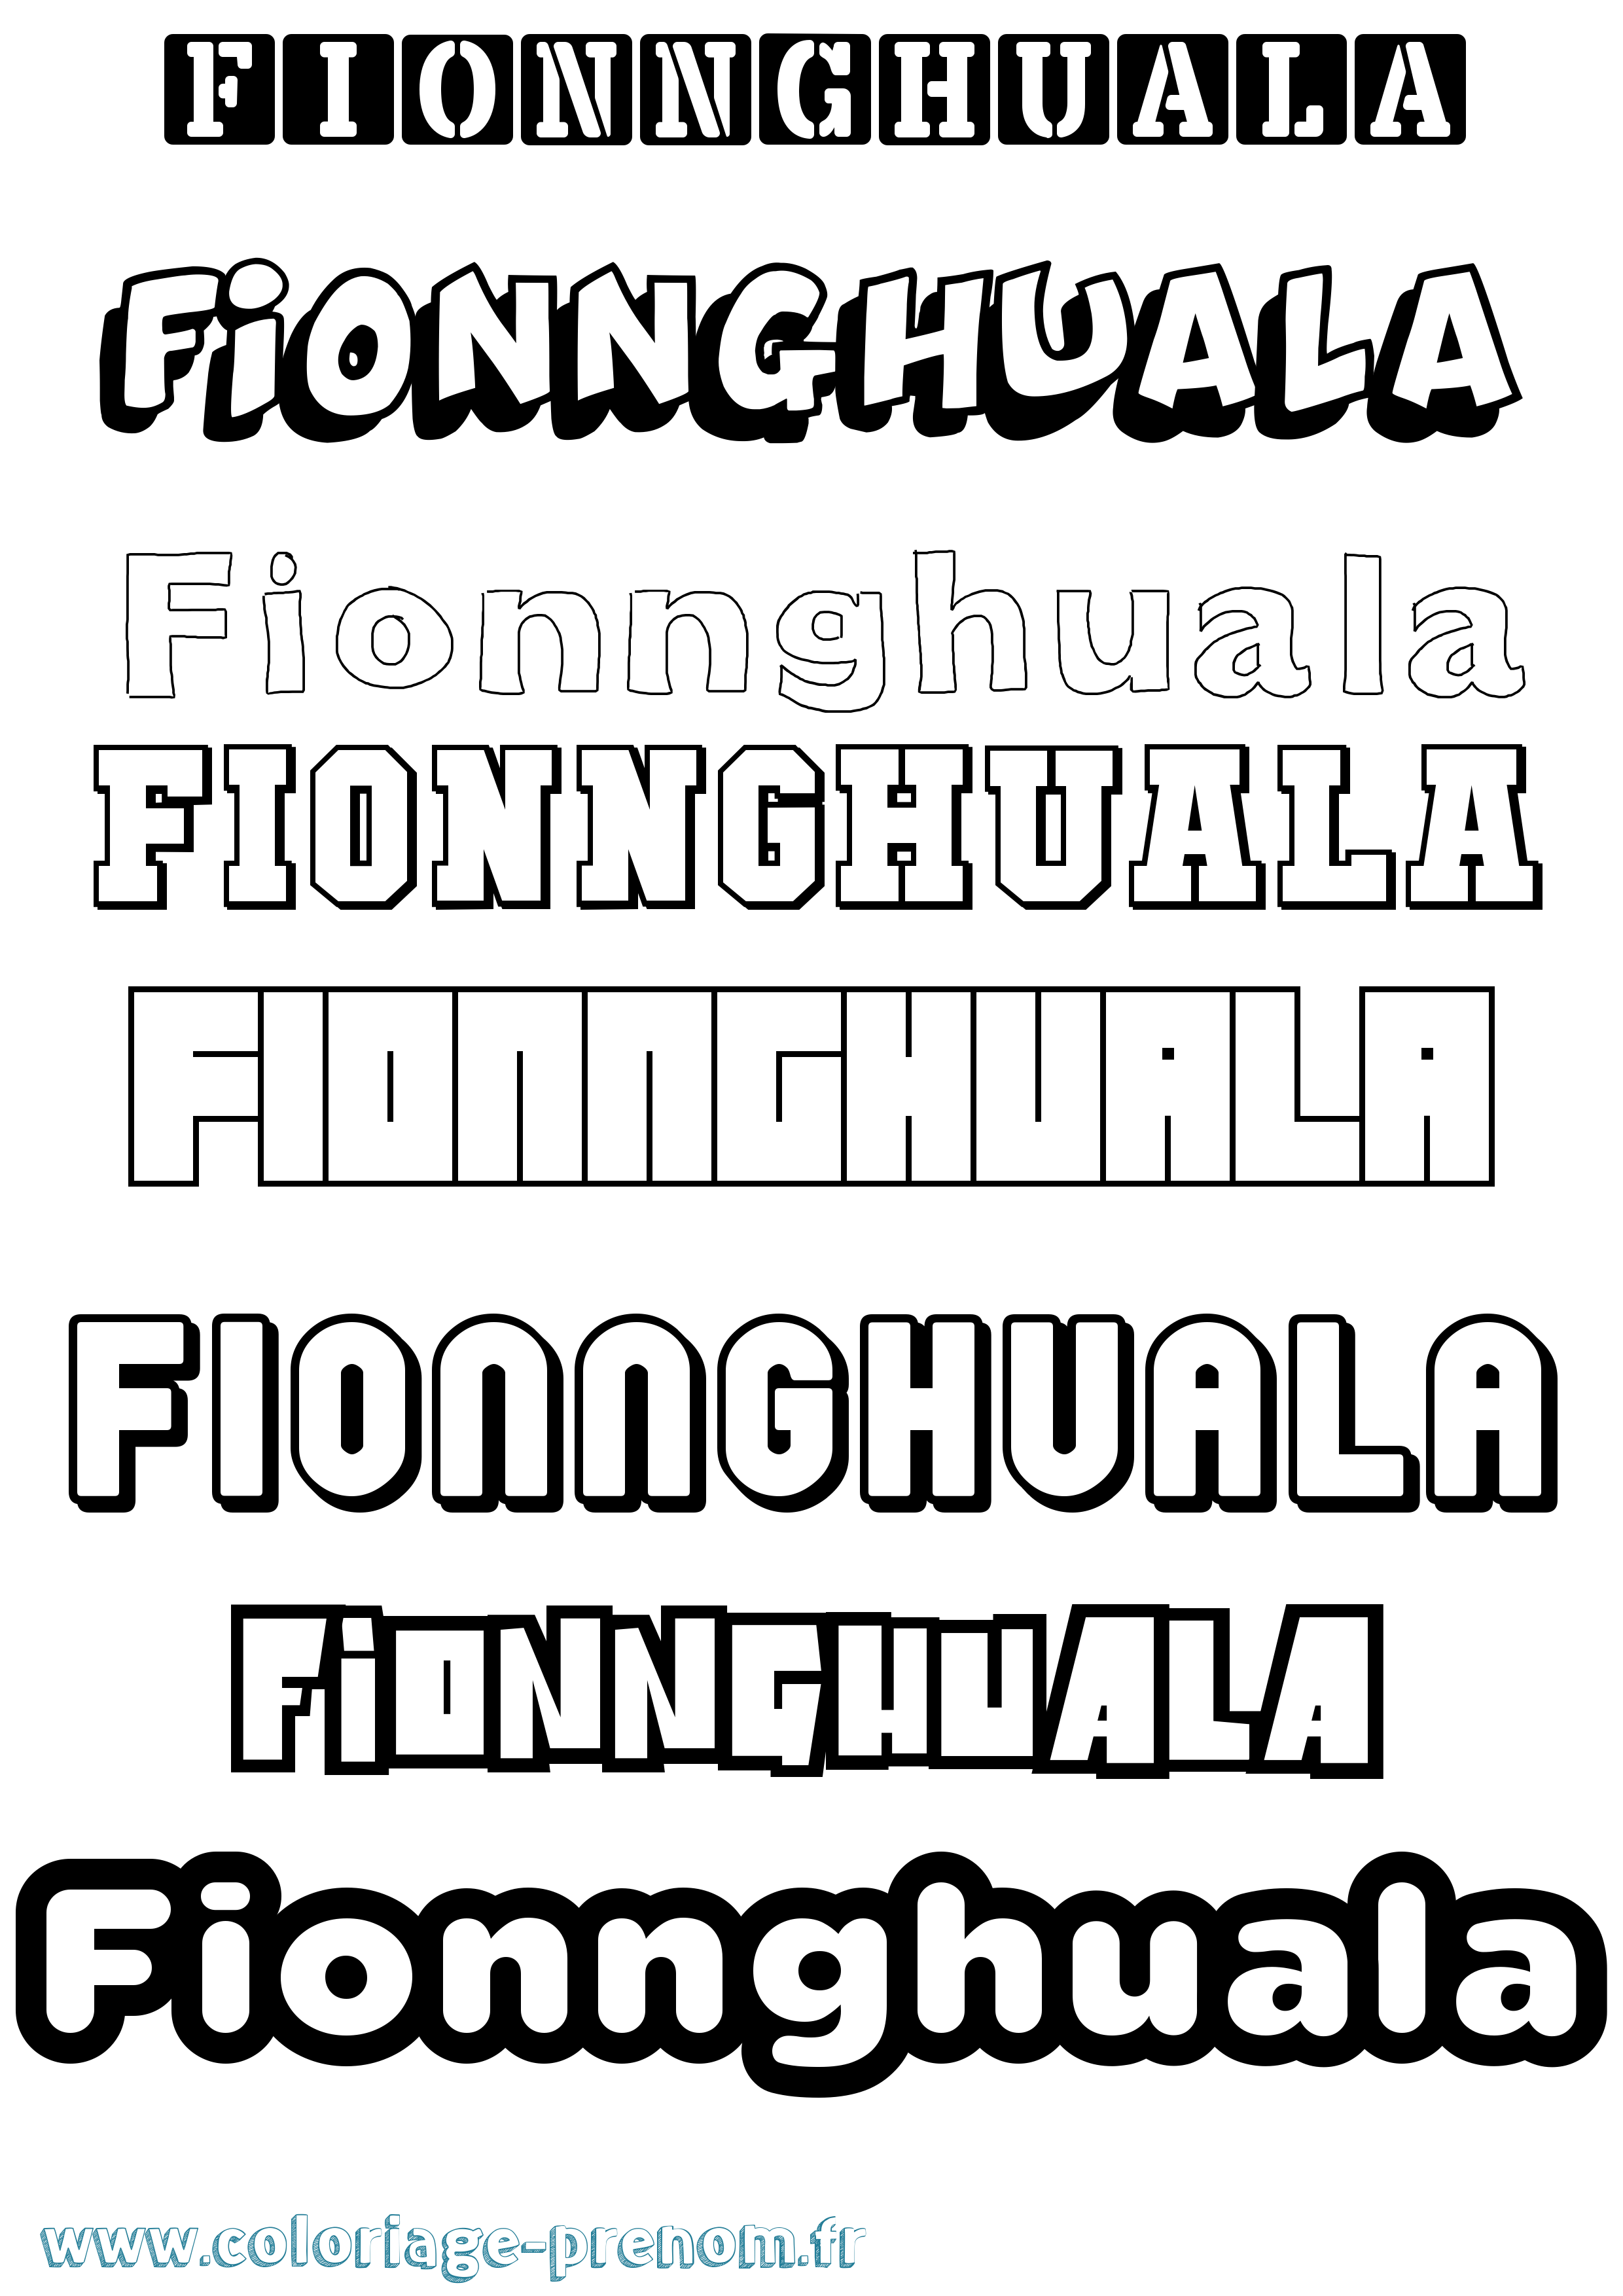 Coloriage prénom Fionnghuala Simple